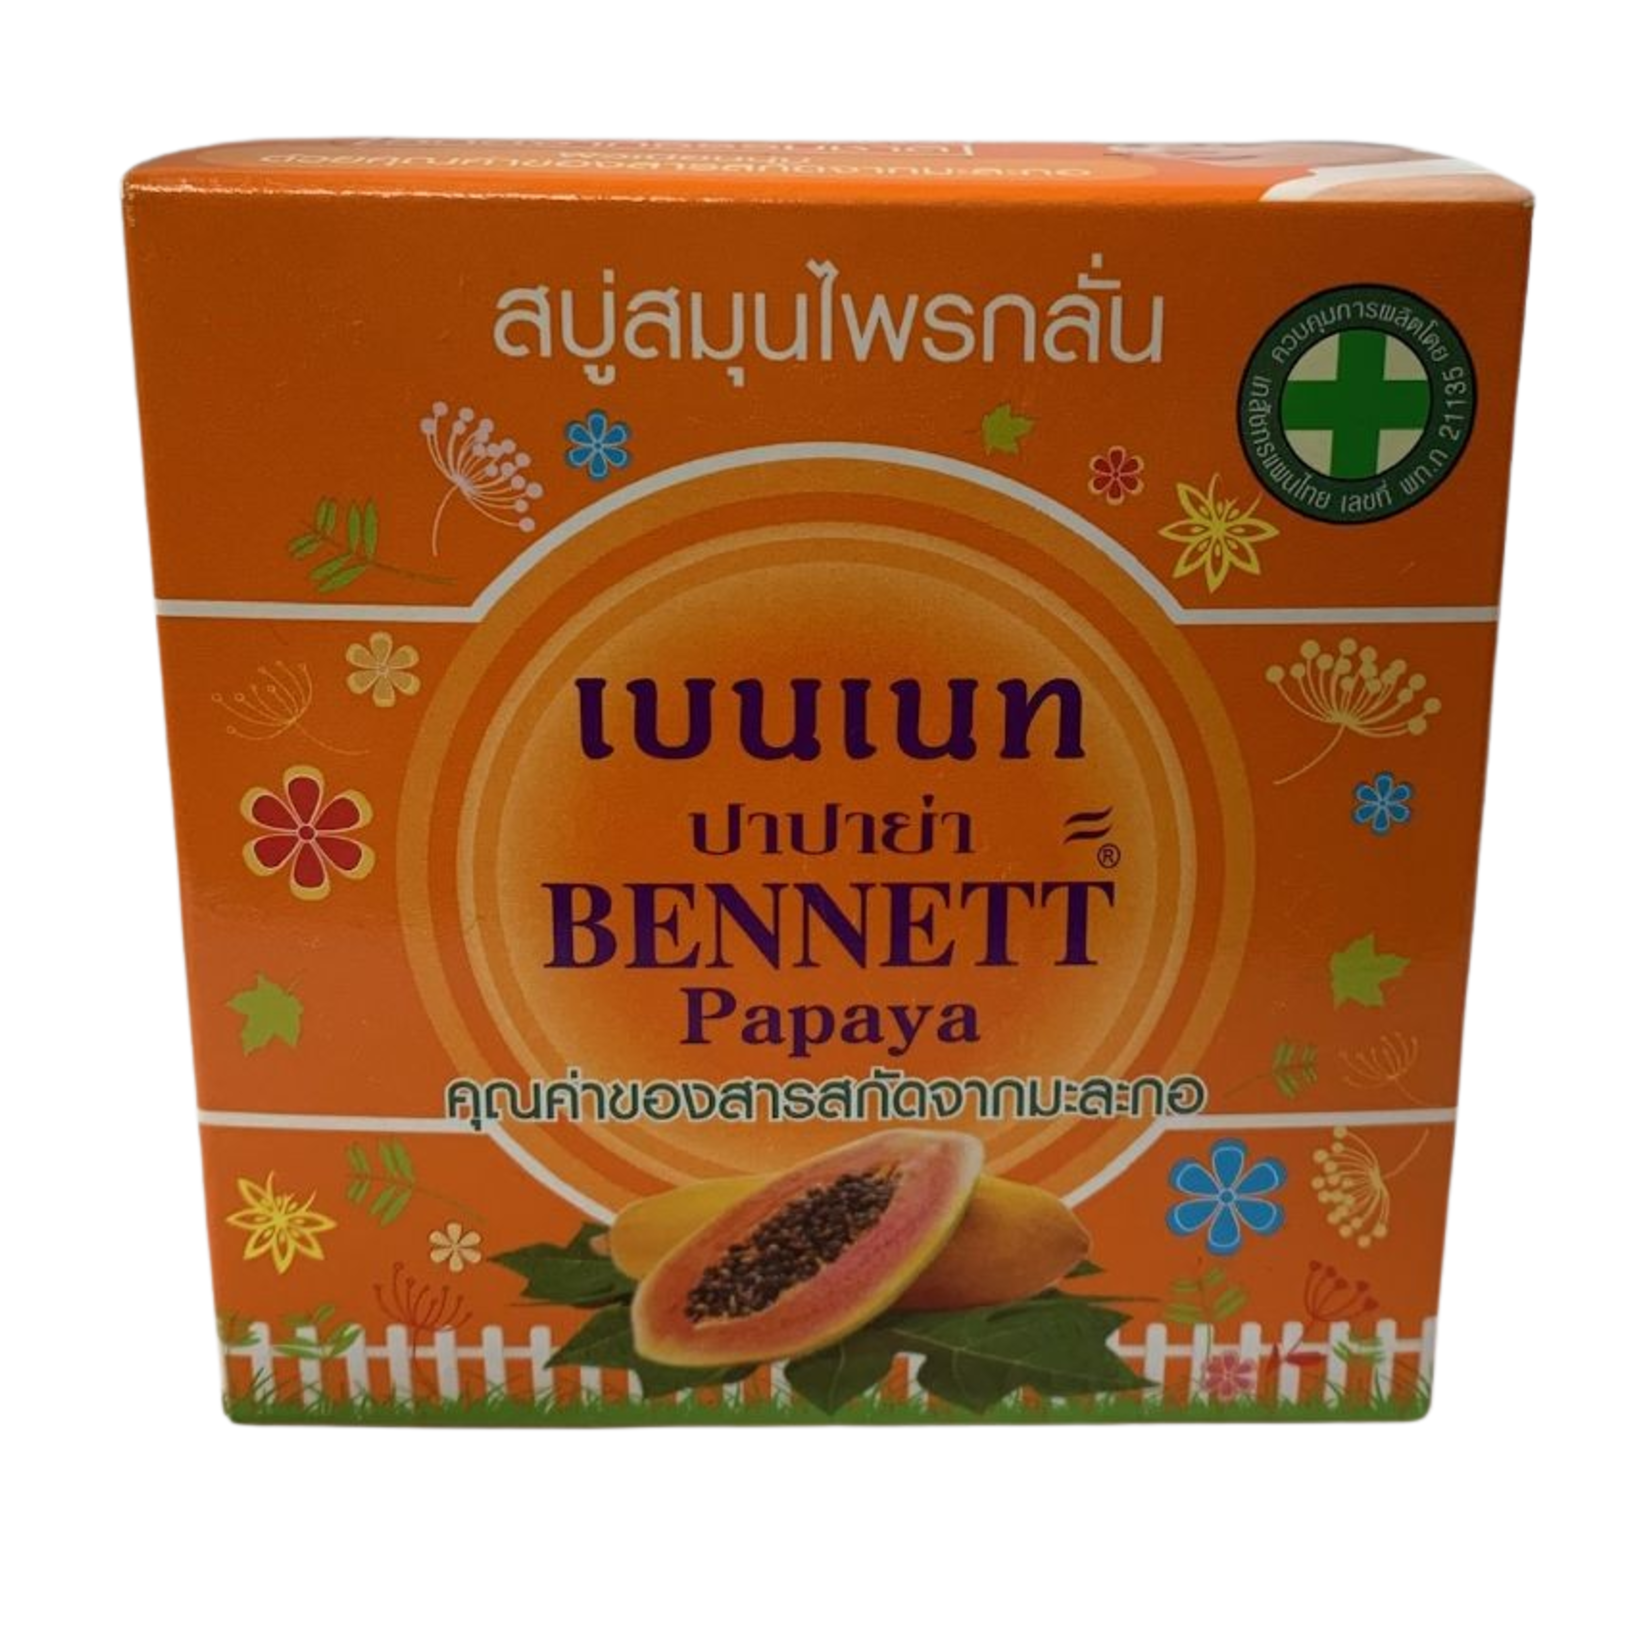 Bennet Bennet Papaya Soap, 160 grams